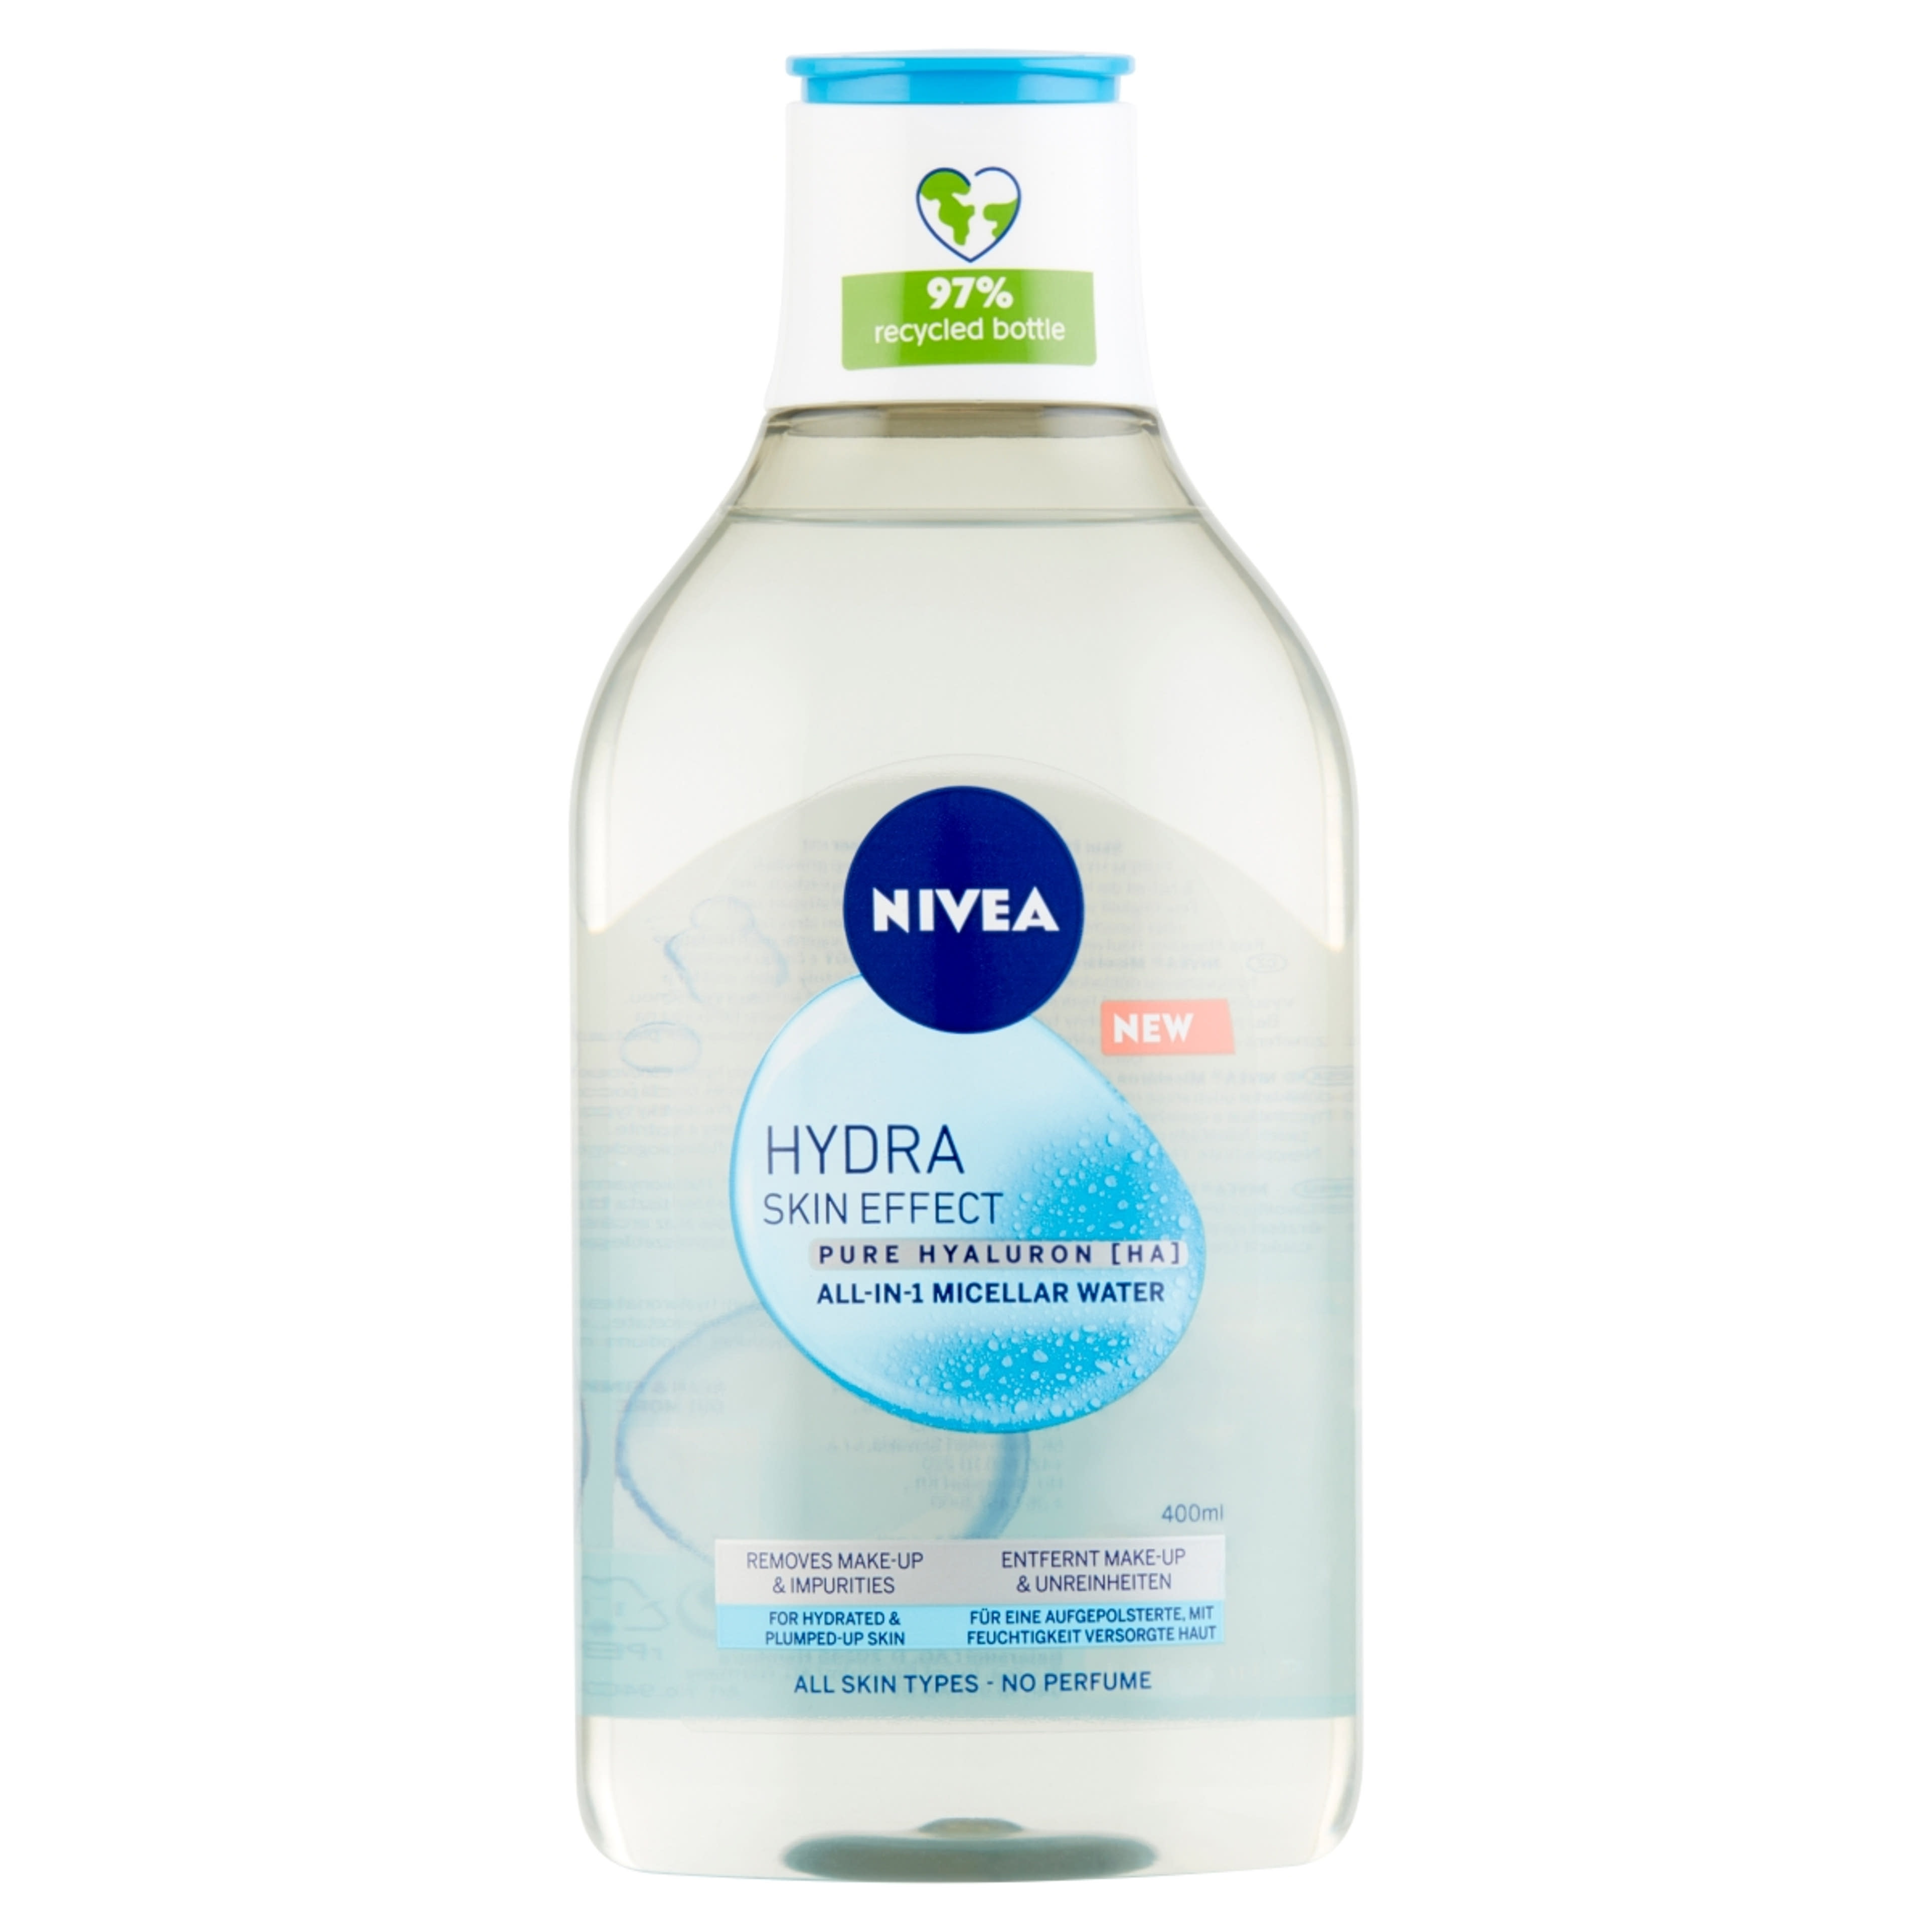 NIVEA Hydra Skin Effect micellás víz - 400 ml